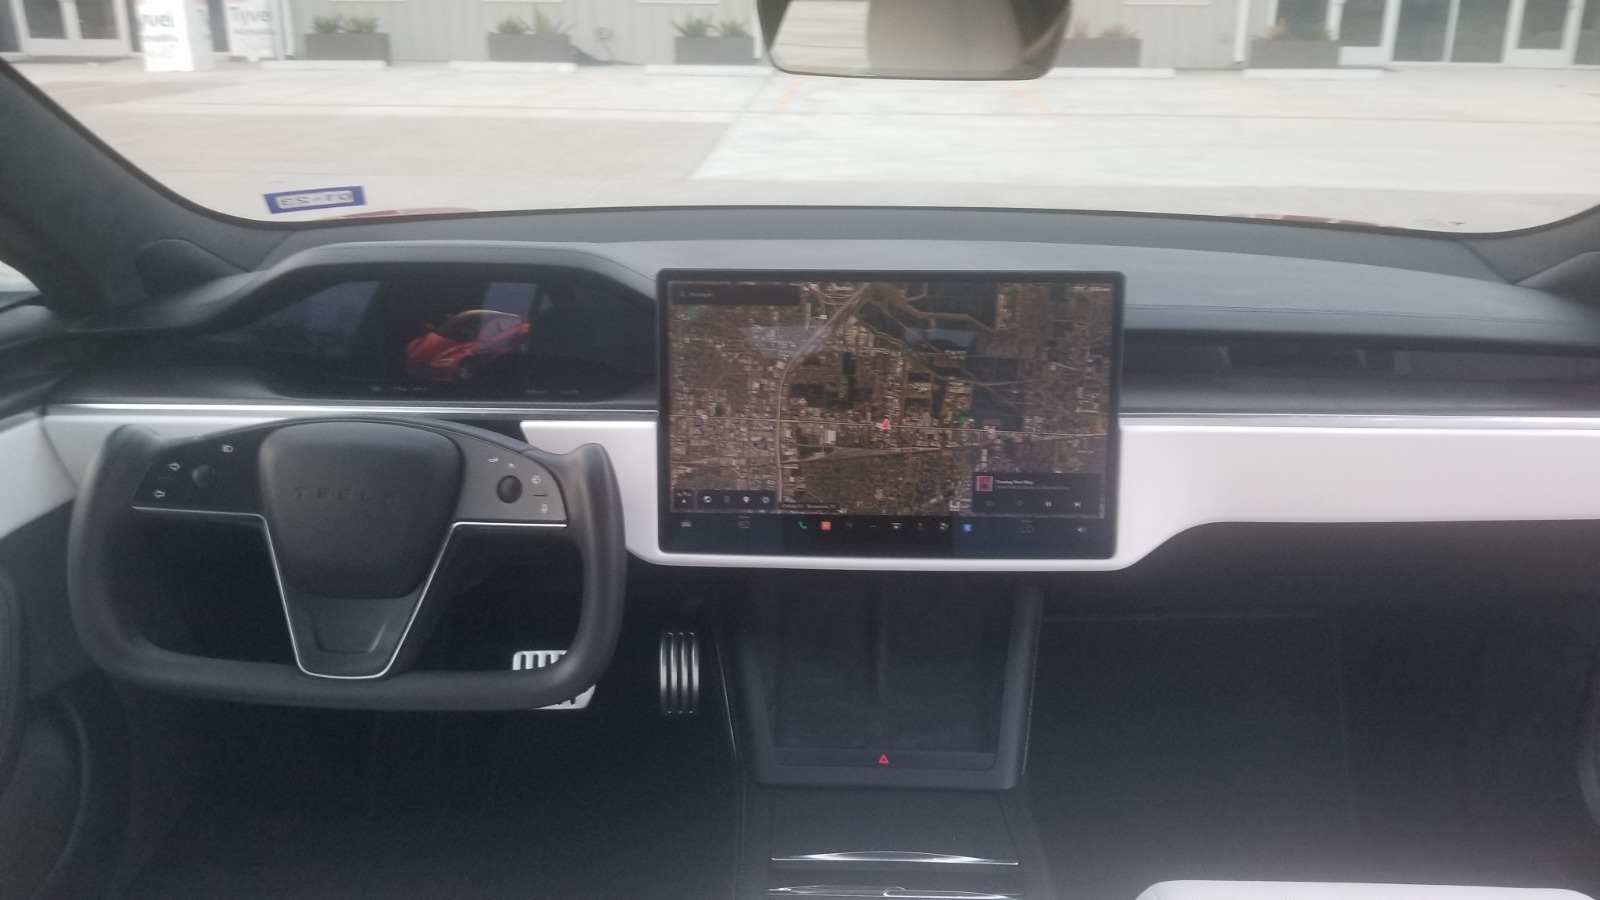 2021 Tesla Model S Plaid - Find My Electric